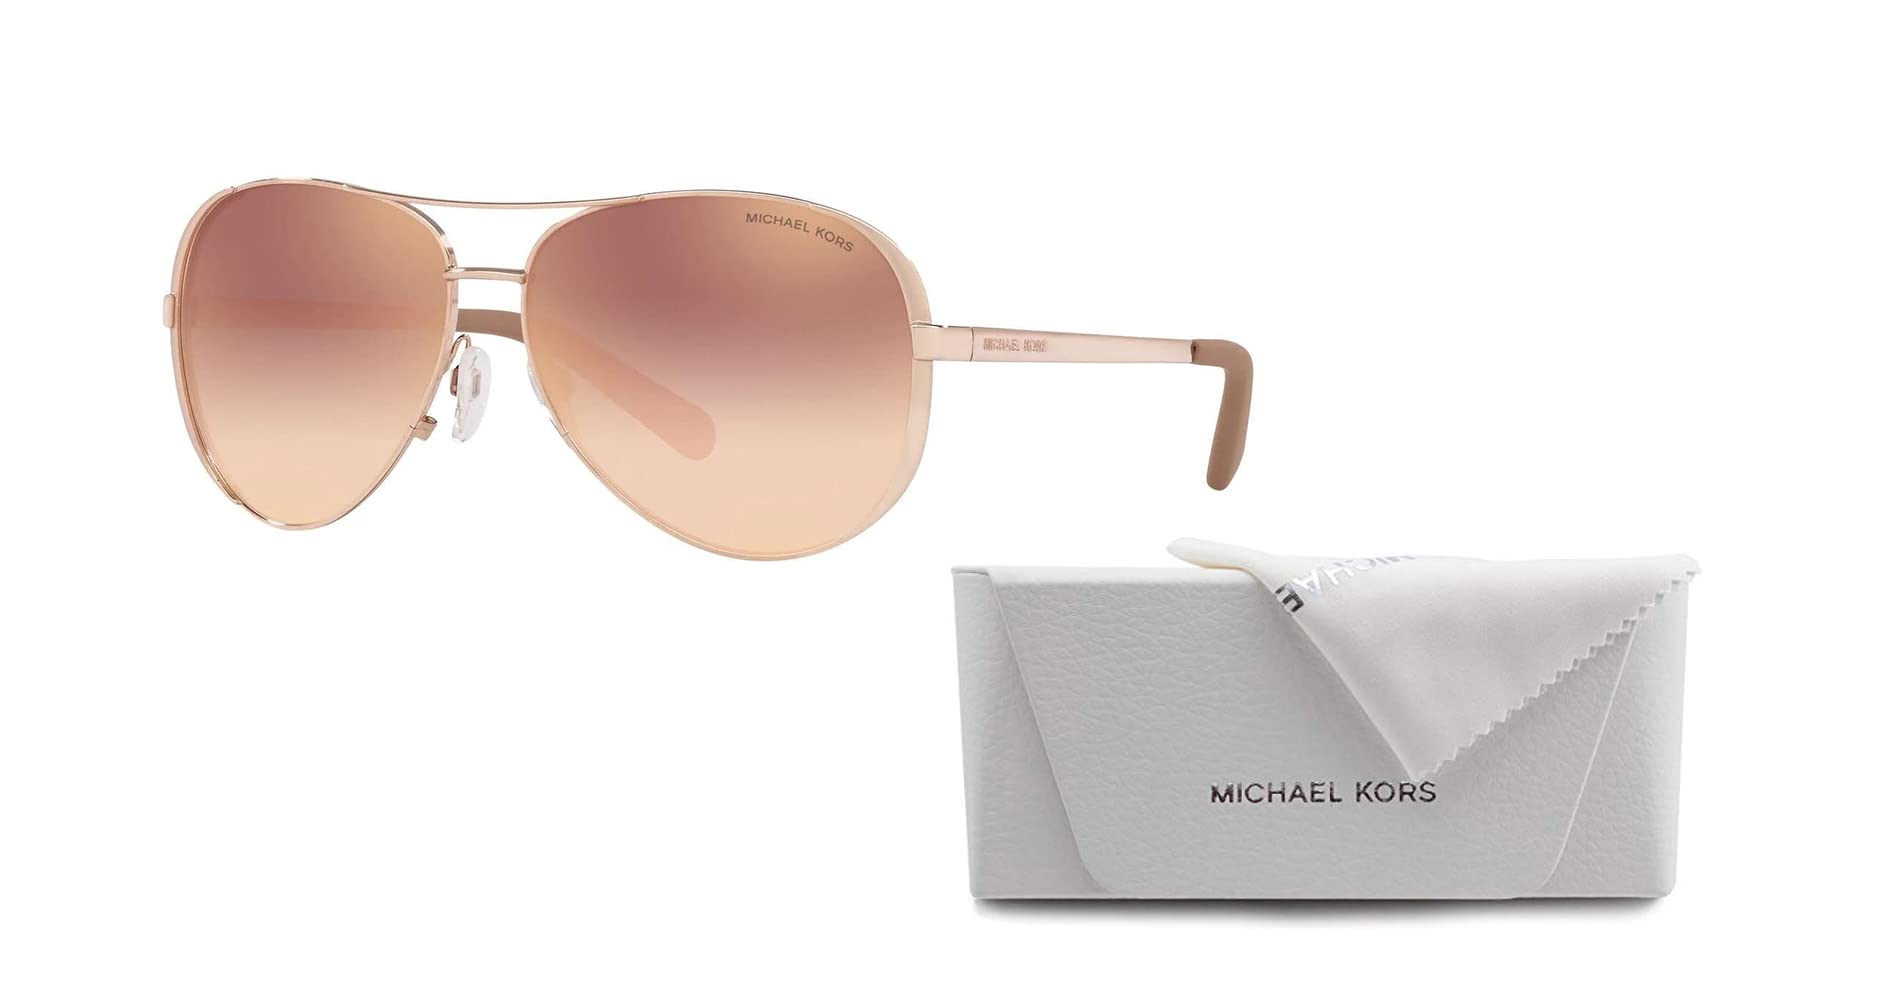 Michael Kors MK5004 CHELSEA Aviator 1153V6 59M SilverBlue Silver Gradient  Mirror Sunglasses For Women FREE Complimentary Eyewear Care Kit   Walmartcom